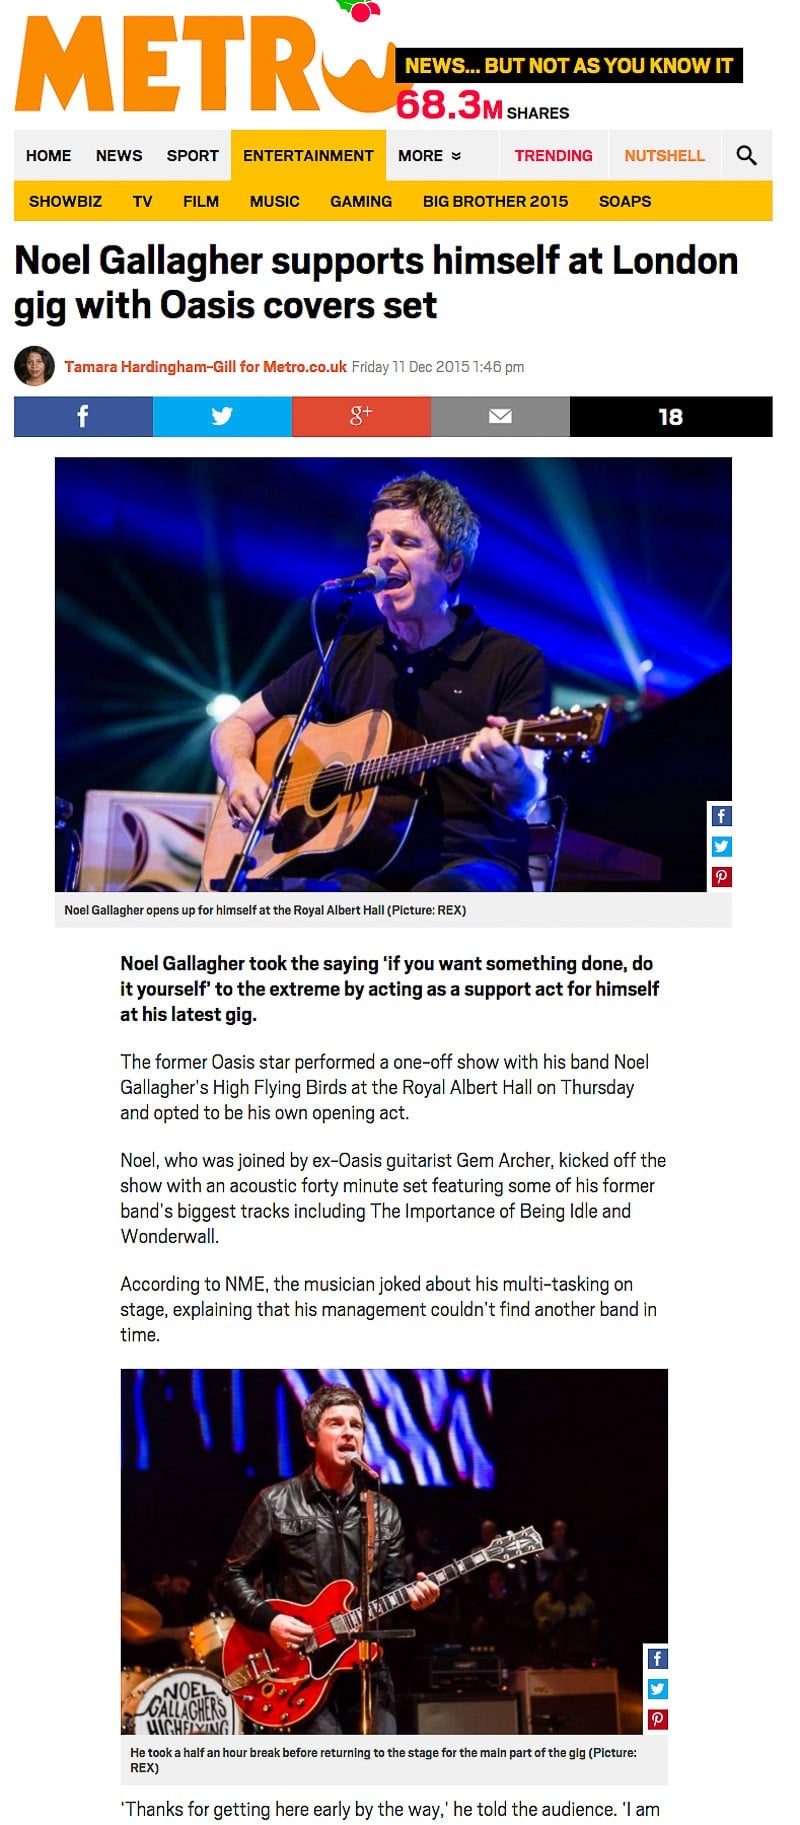 Image usage - Metro online 11 December 2015 - Noel Gallagher live at the Royal Albert Hall 10 December 2015